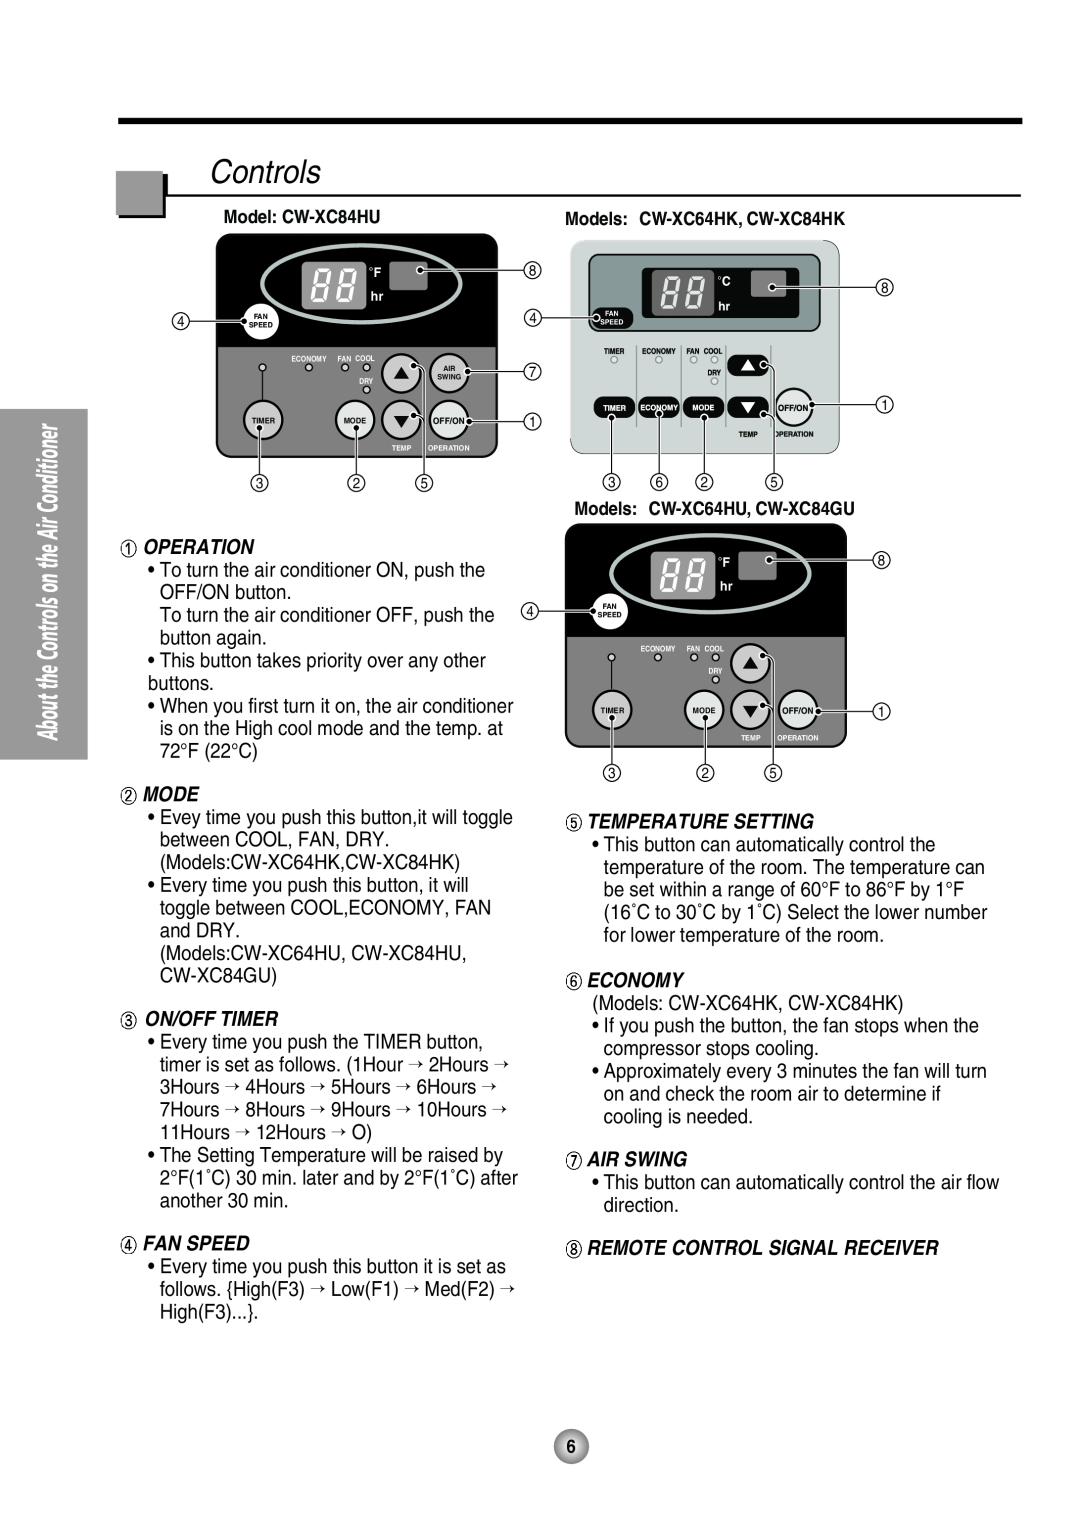 Panasonic CW-XC64HU manual Operation, Mode, Temperature Setting, Economy, On/Off Timer, Fan Speed, Controls 